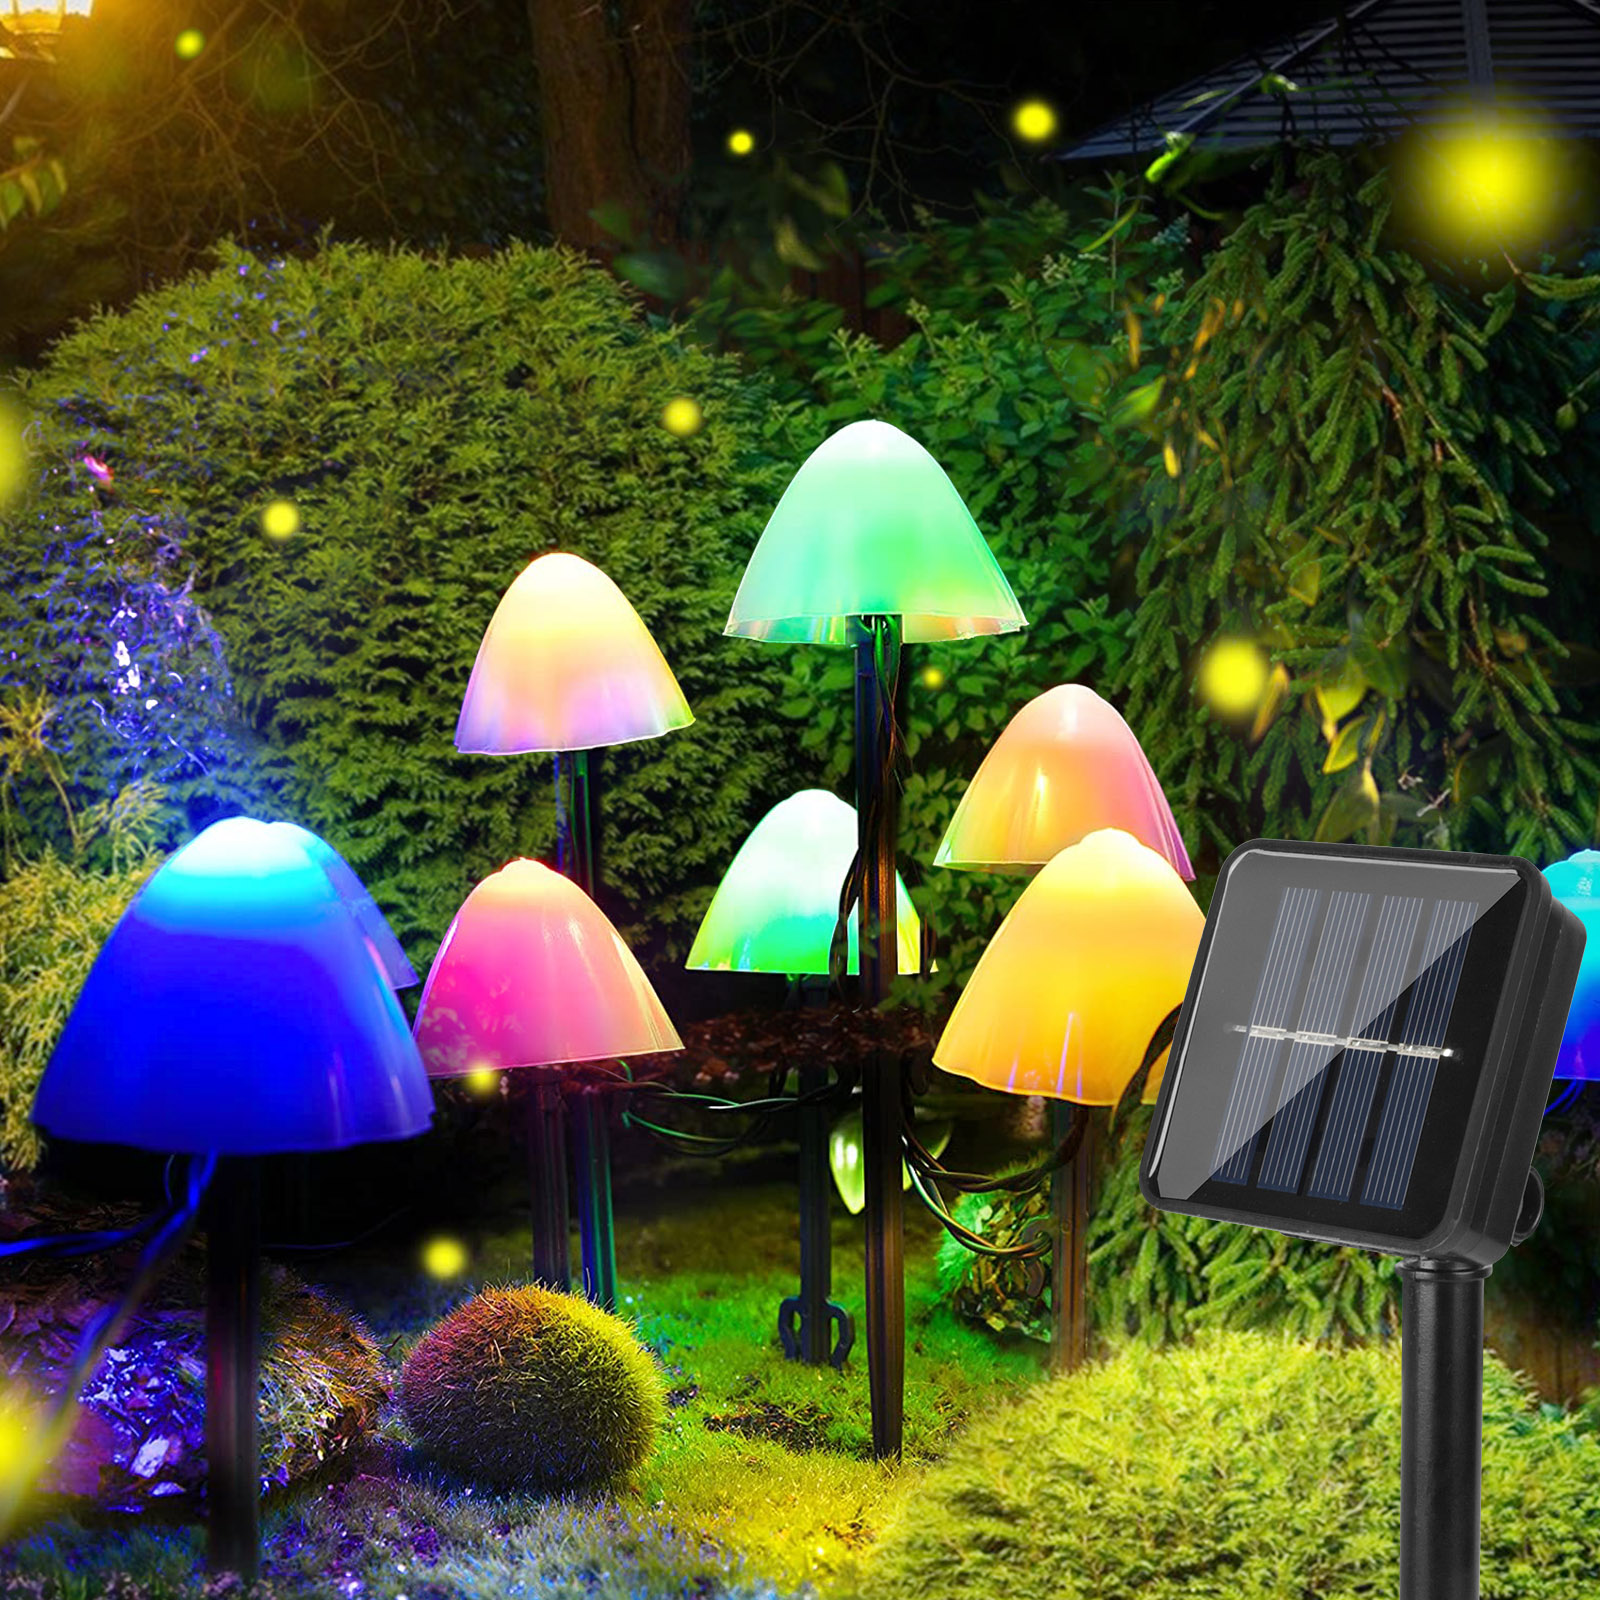 Solar Powered Outdoor Novelty LED Light Fairy House Mushroom Ornament Lamp Decor 